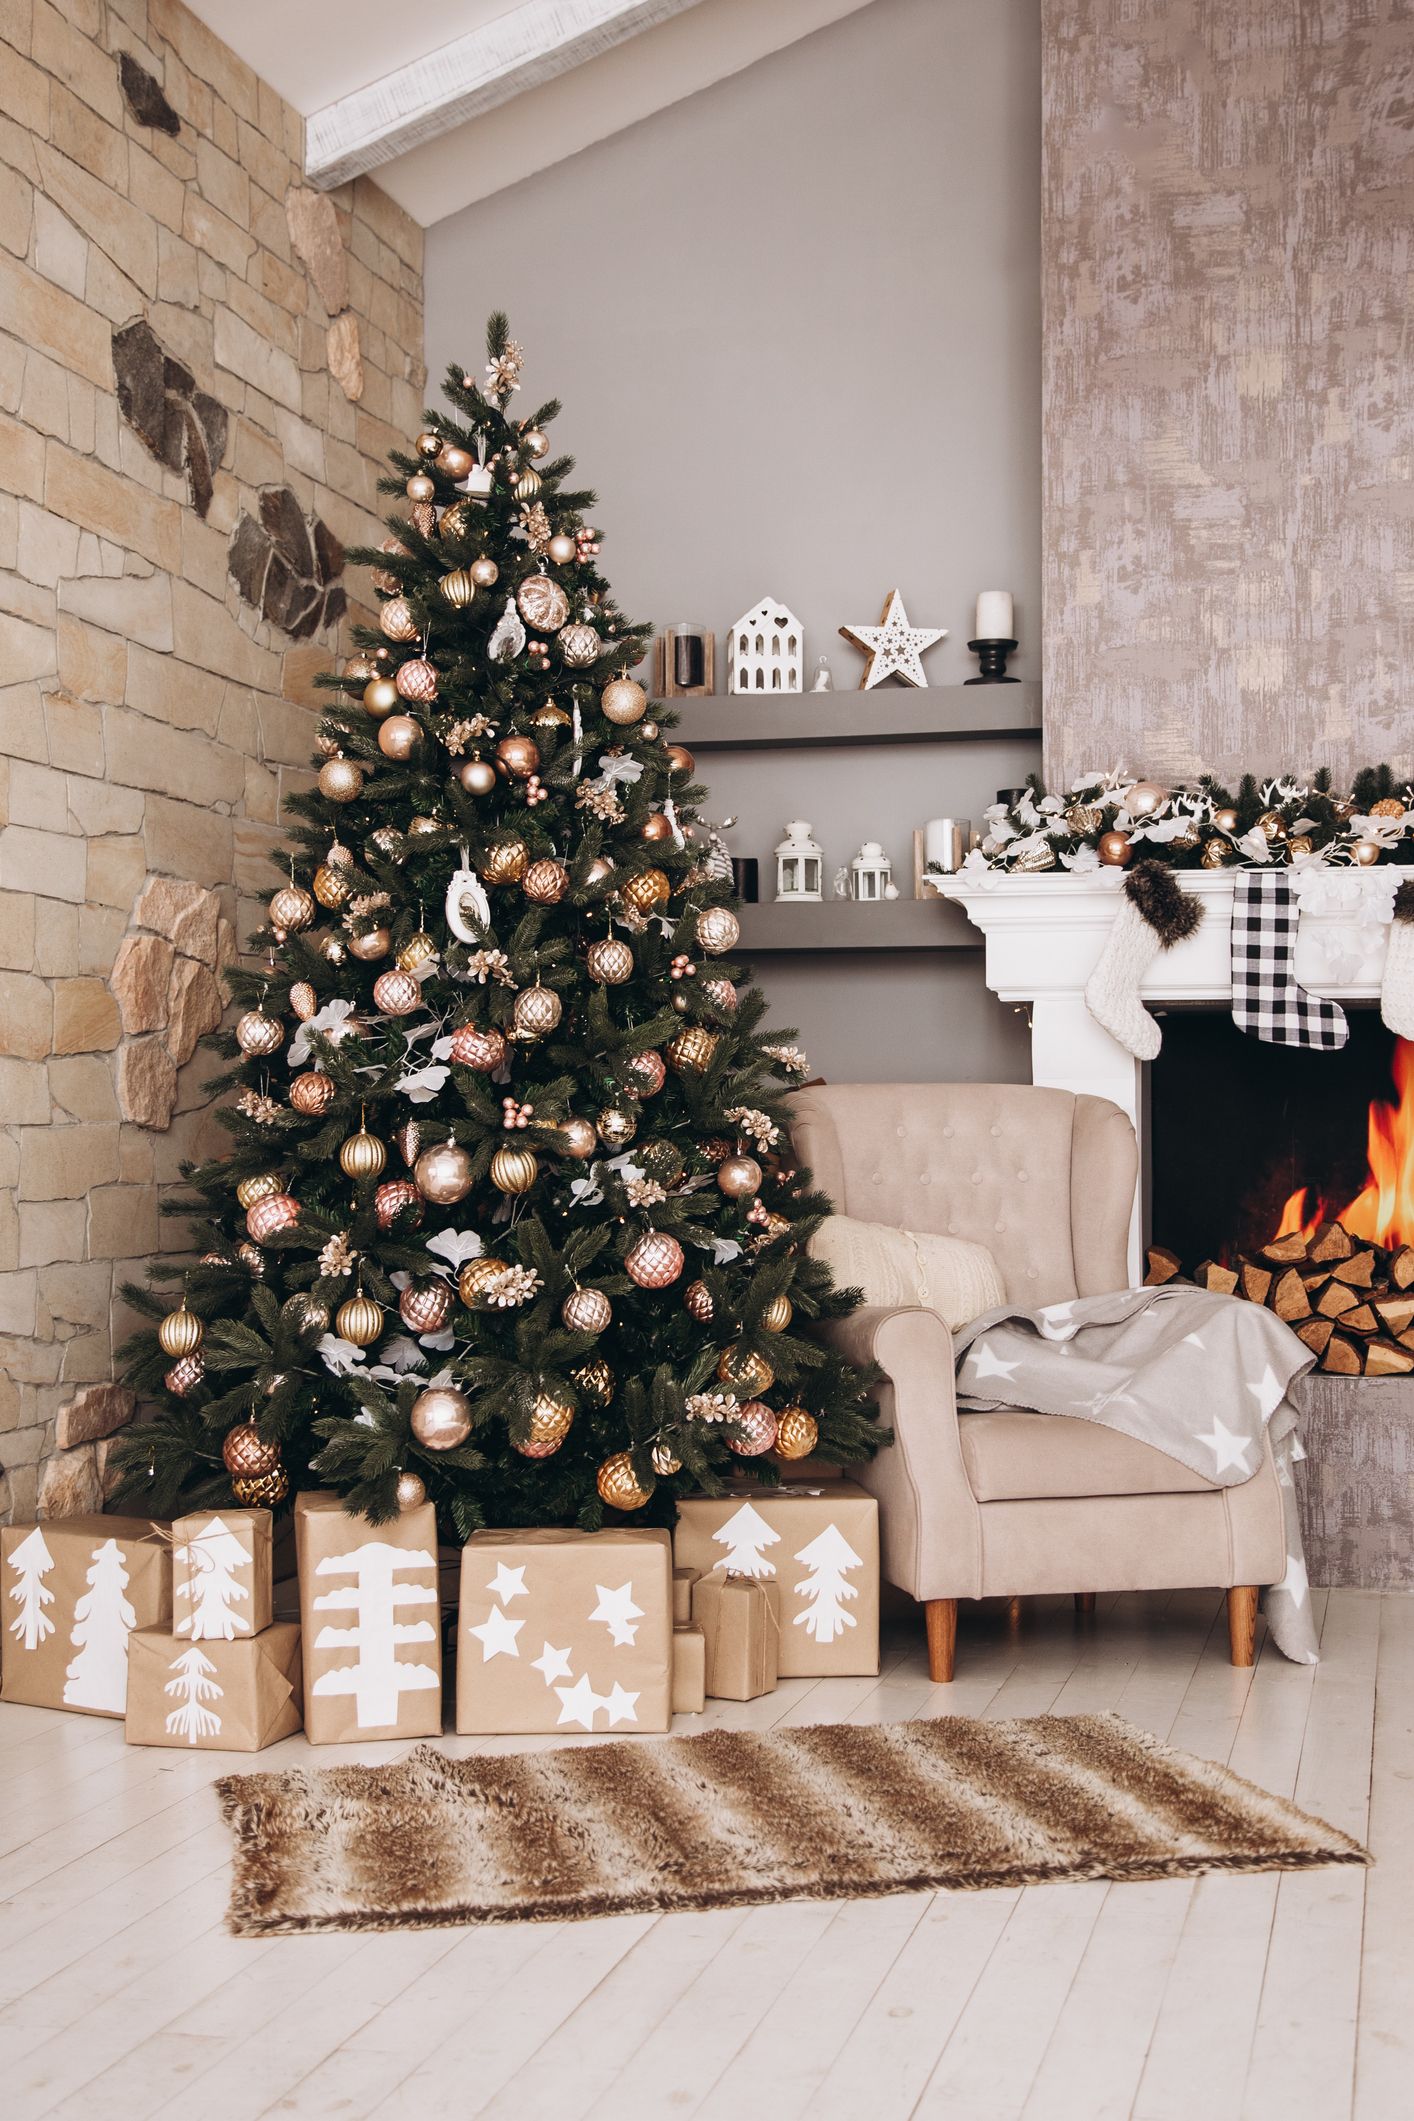 60+ Stunning Christmas Tree Ideas - Best Christmas Tree Decorations